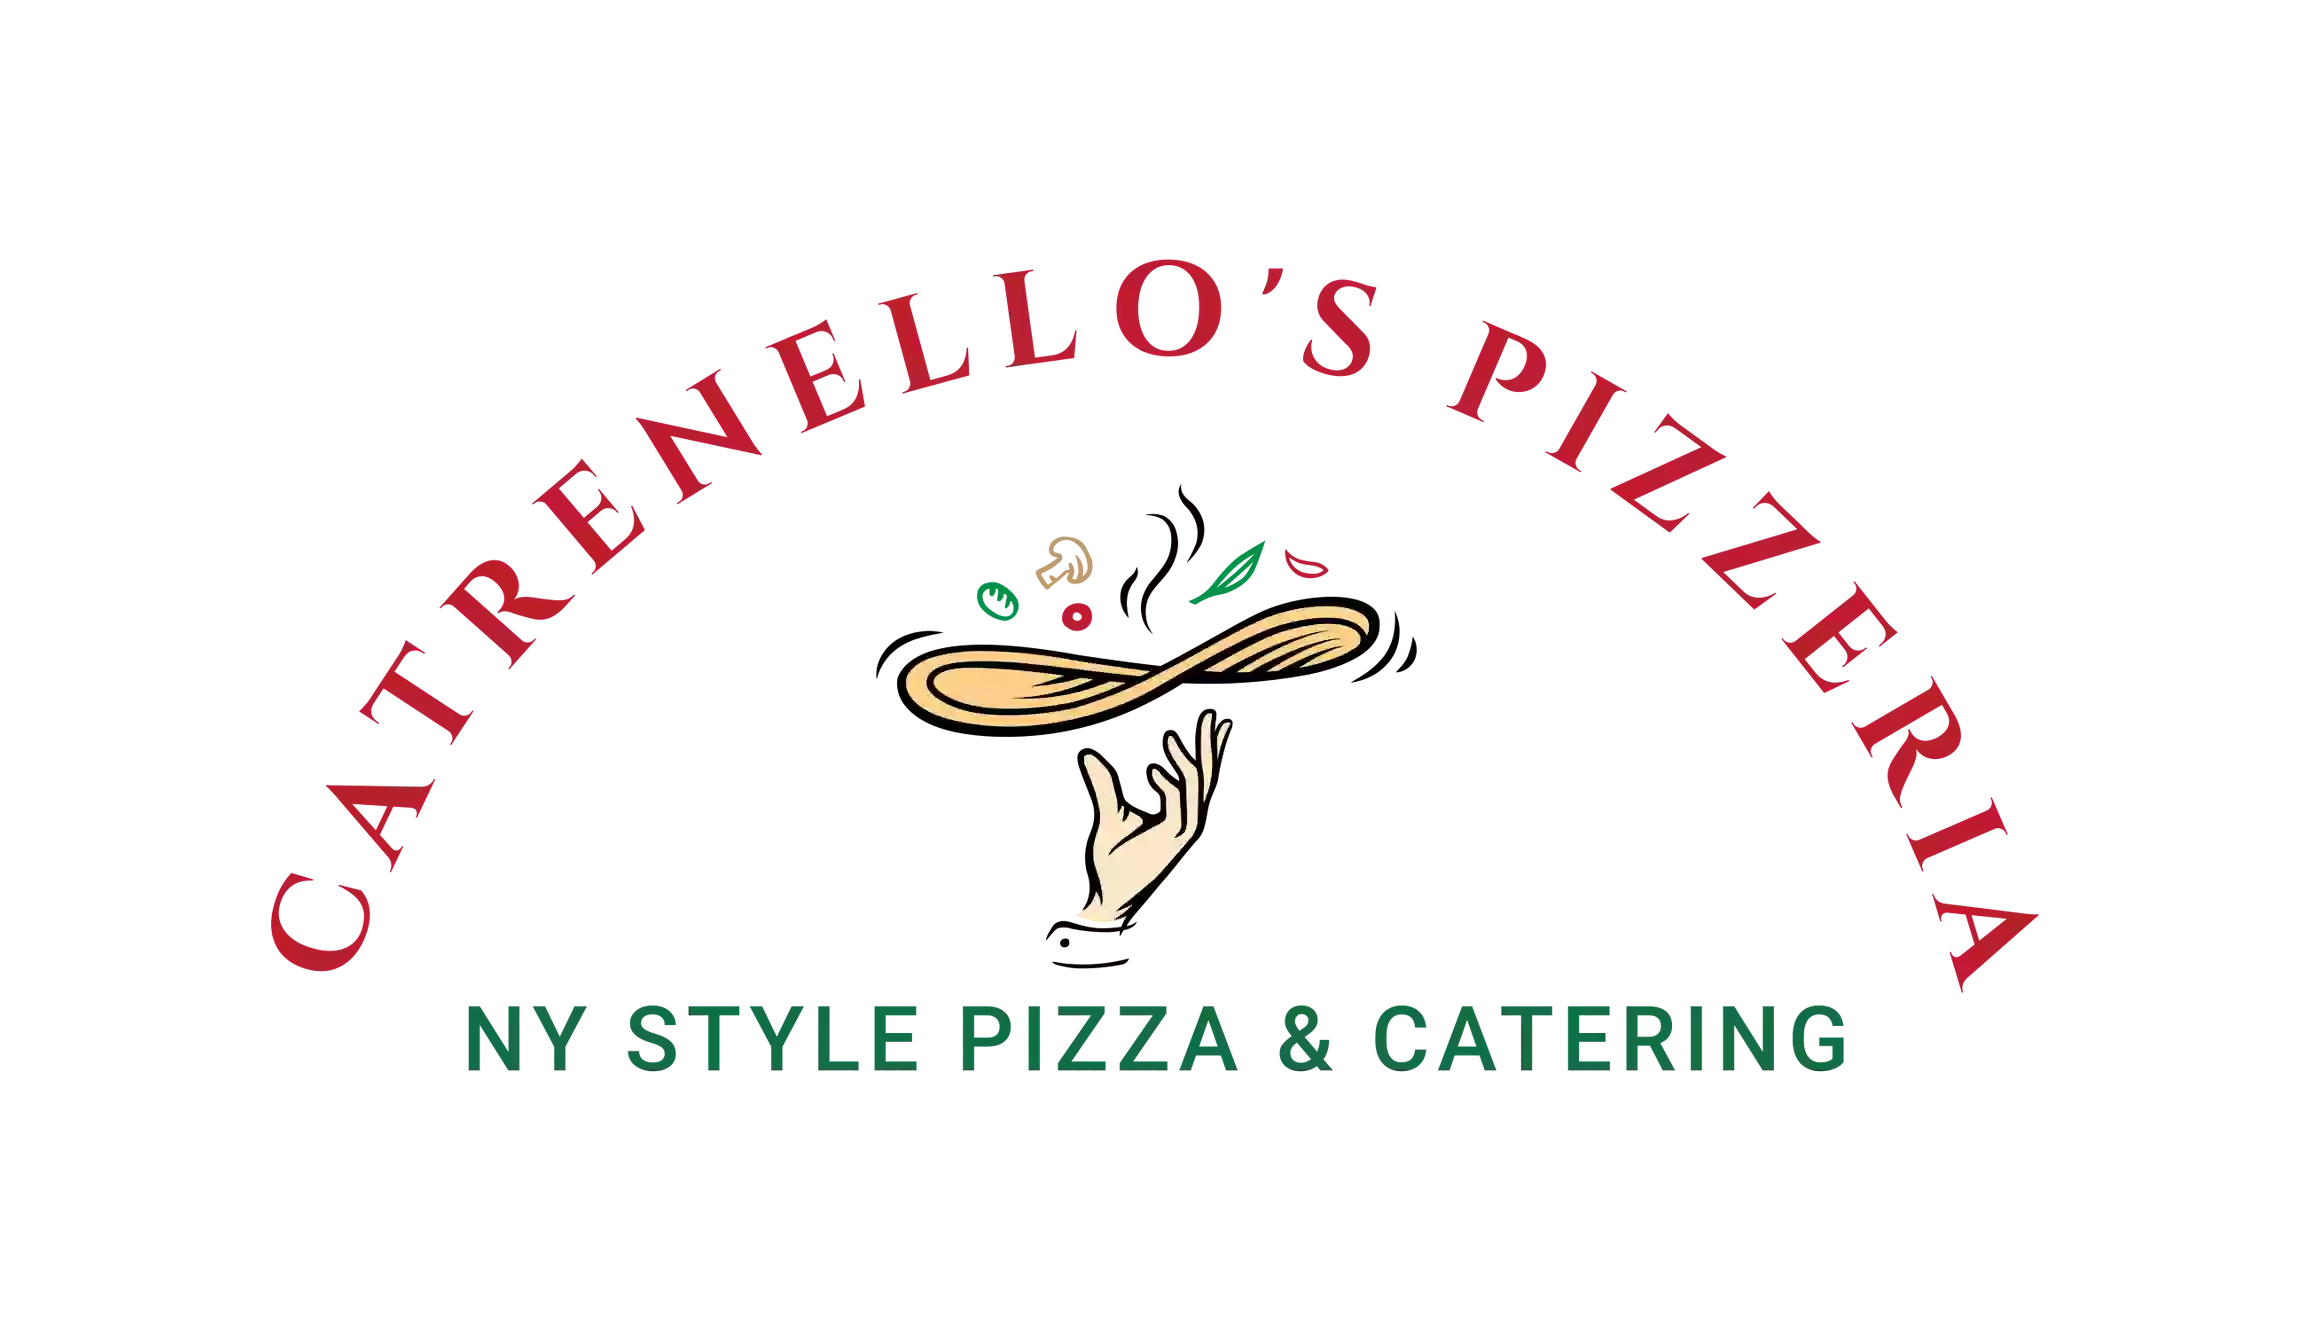 Catrenello's Pizzeria & Catering